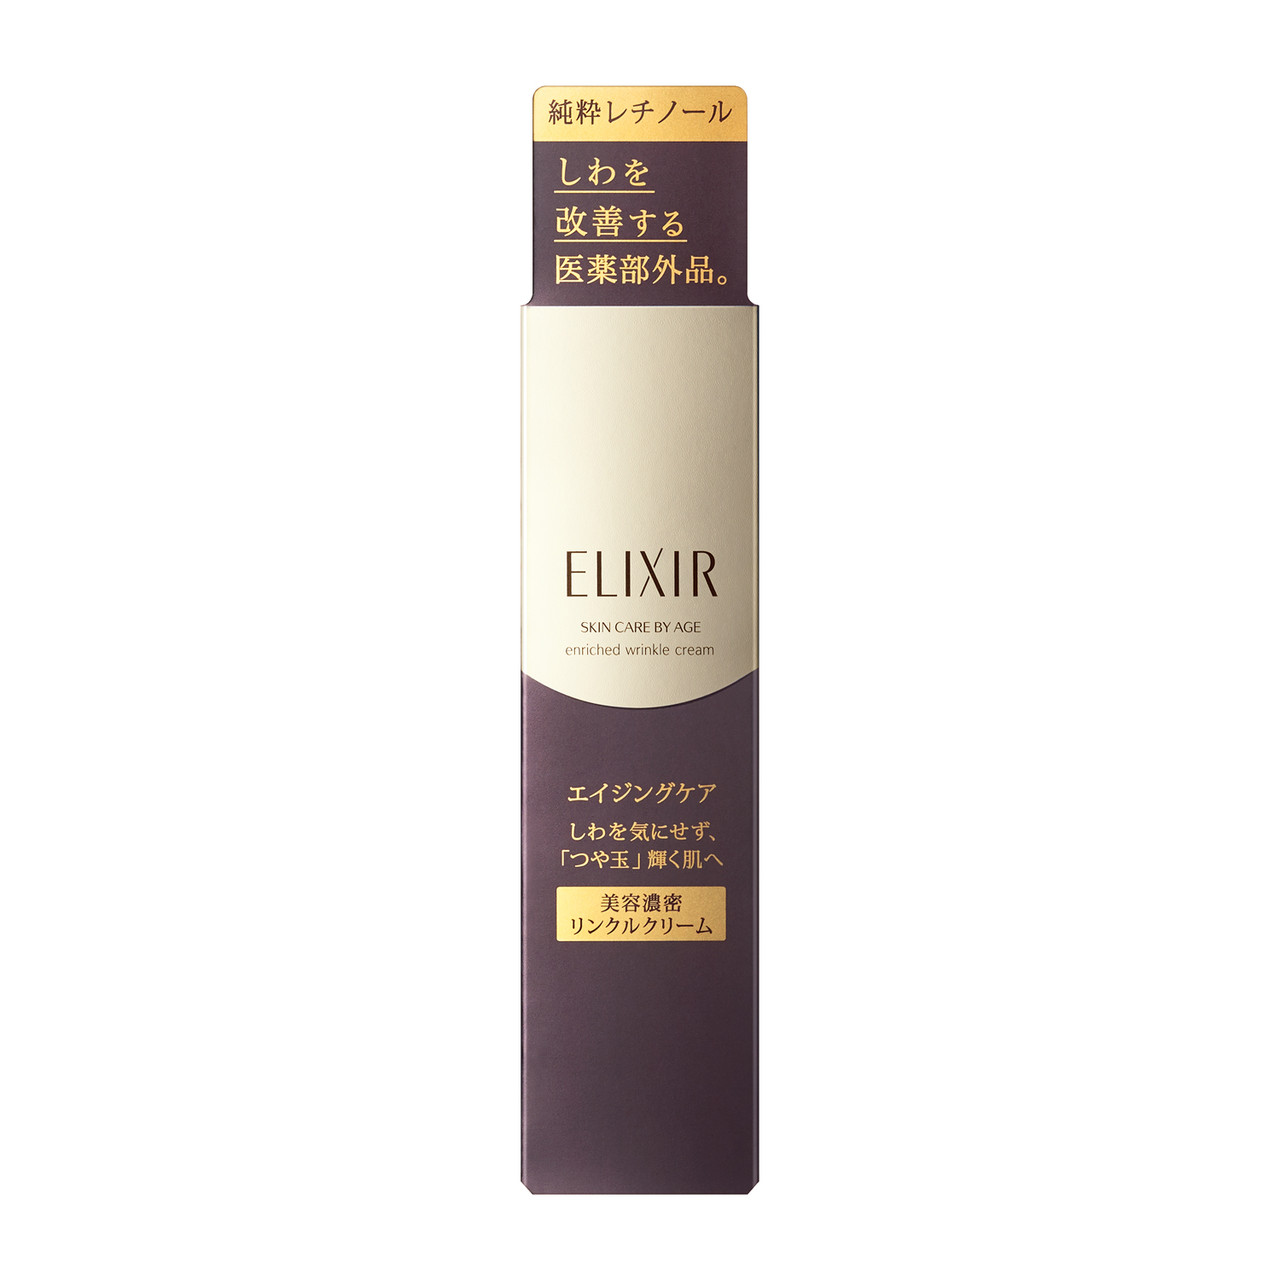 Shiseido Elixir Superieur Enriched Wrinkle Cream L крем проти зморшок навколо очей і в носо-губній зоні, 22 г